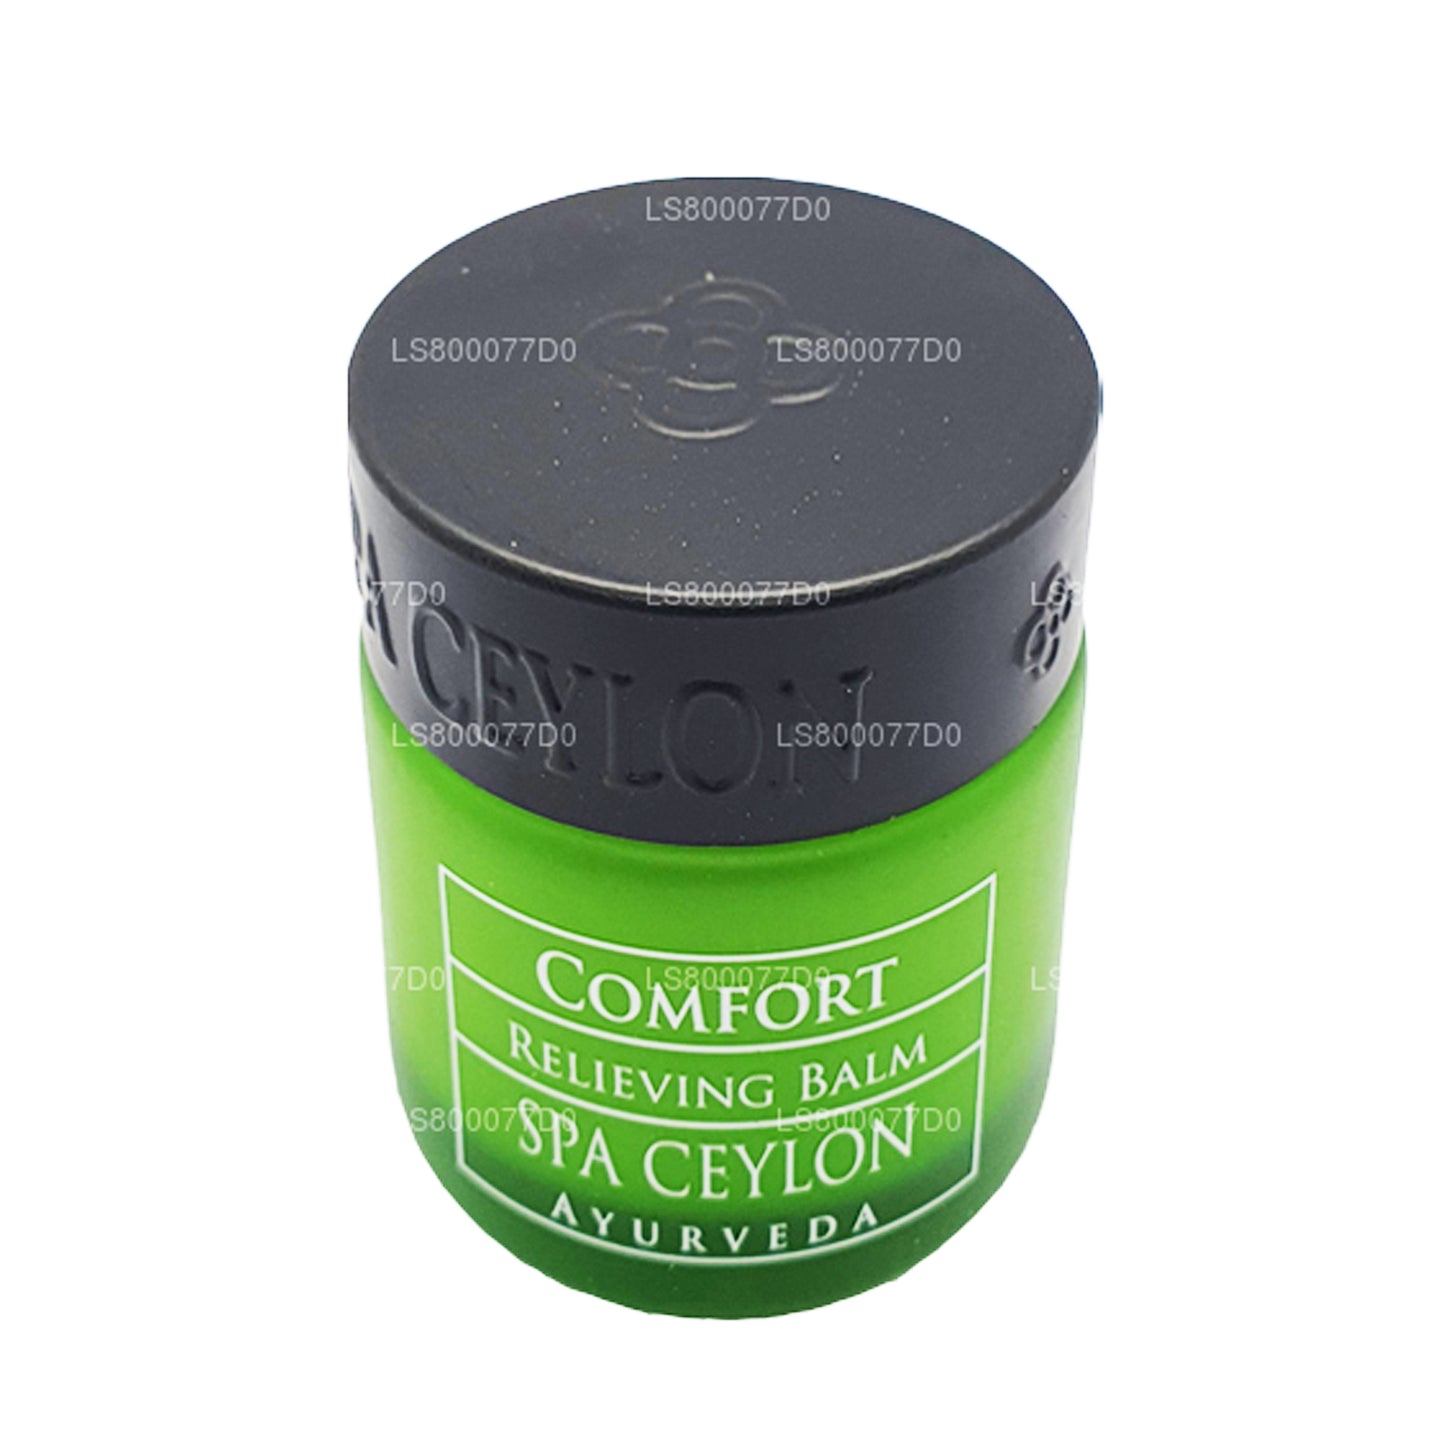 Spa Ceylon Comfort lindrende balsam (25g)